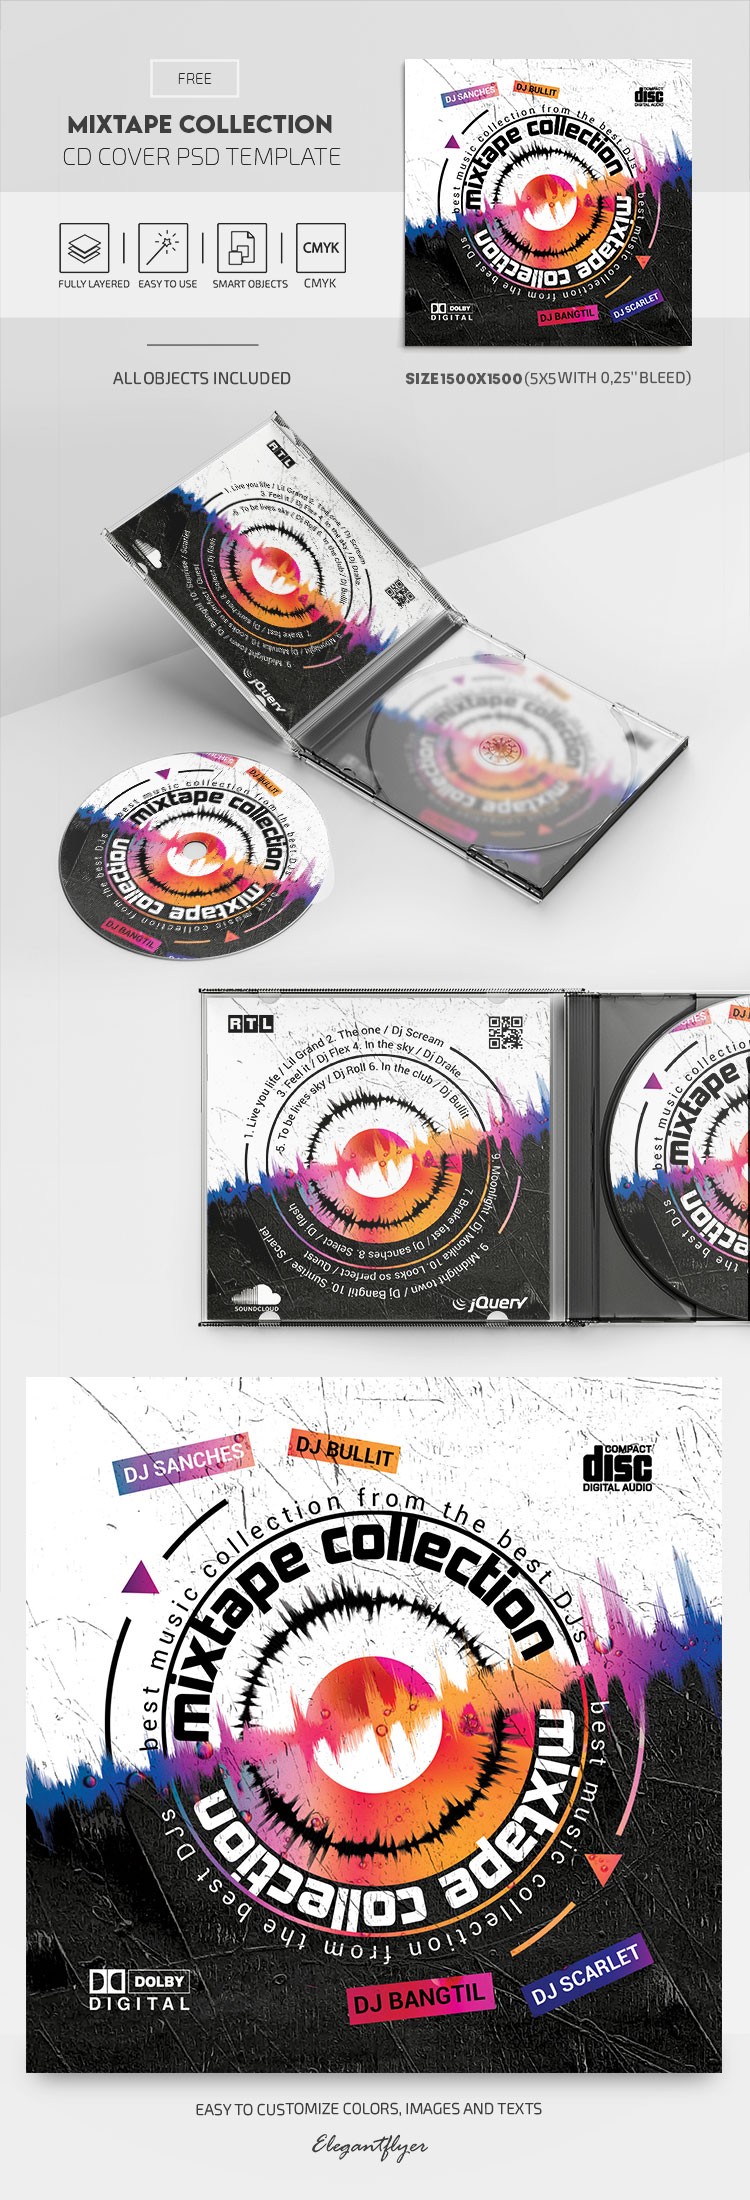 Mixtape-Sammlung CD-Cover by ElegantFlyer